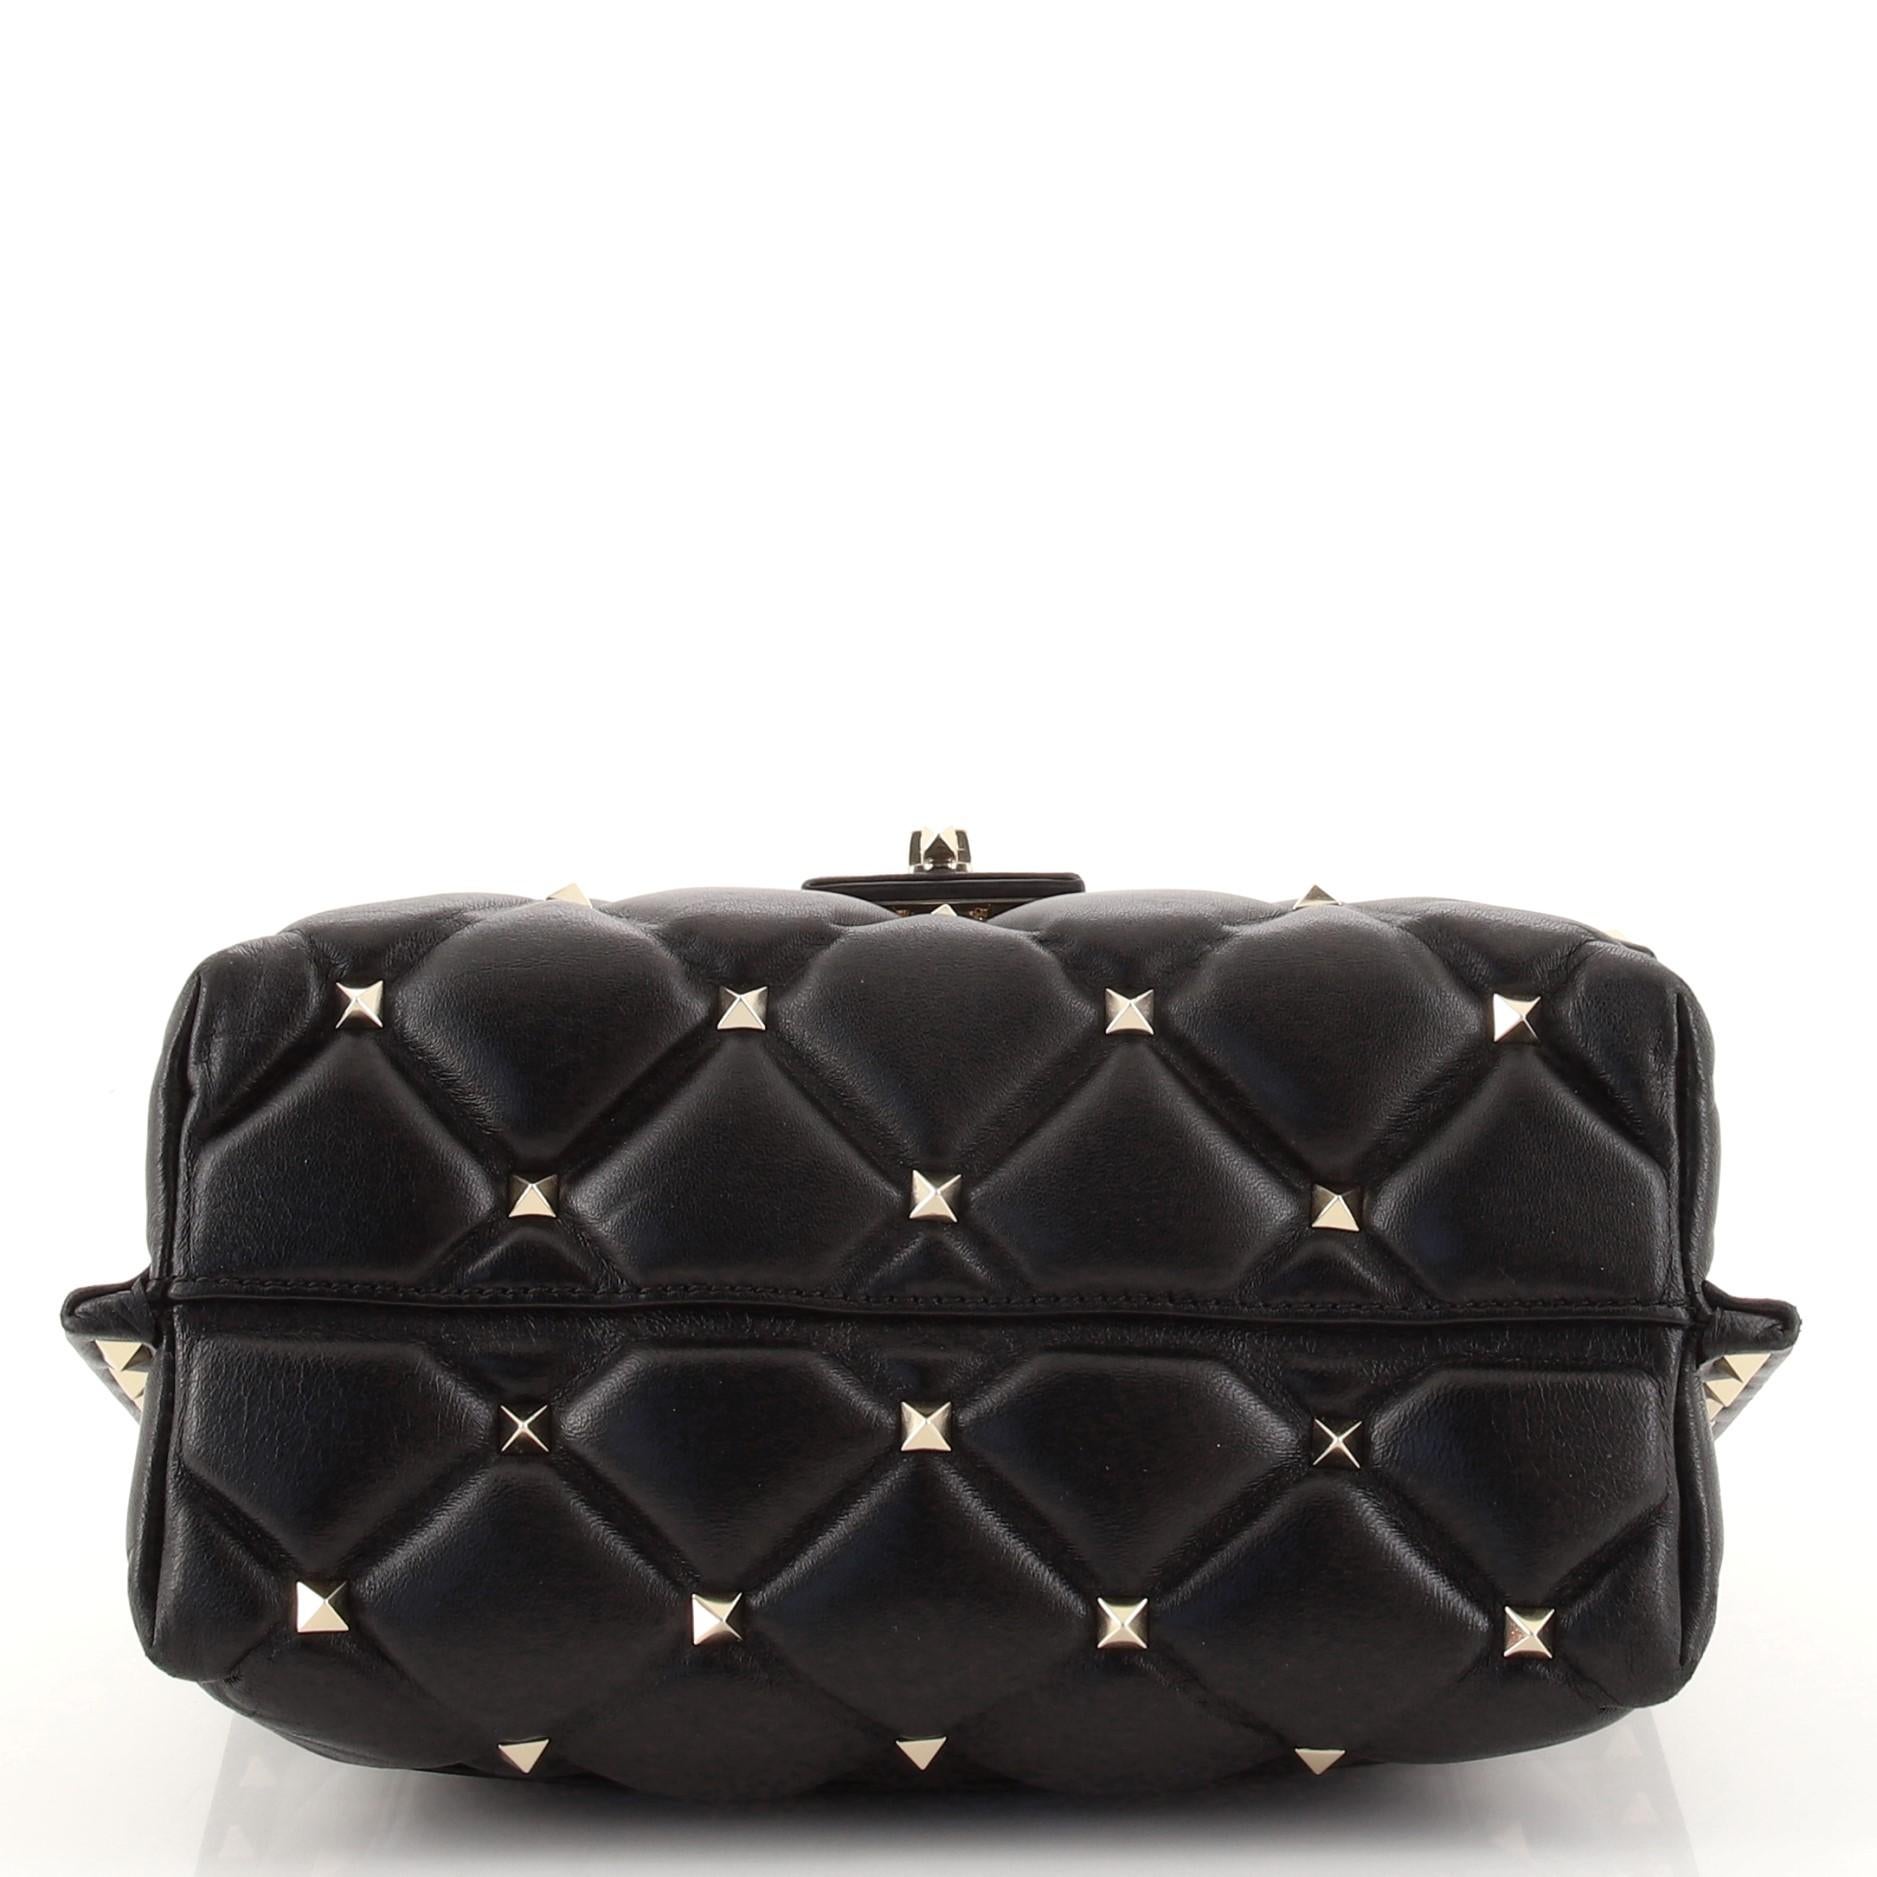 Black Valentino Candystud Top Handle Bag Leather Medium